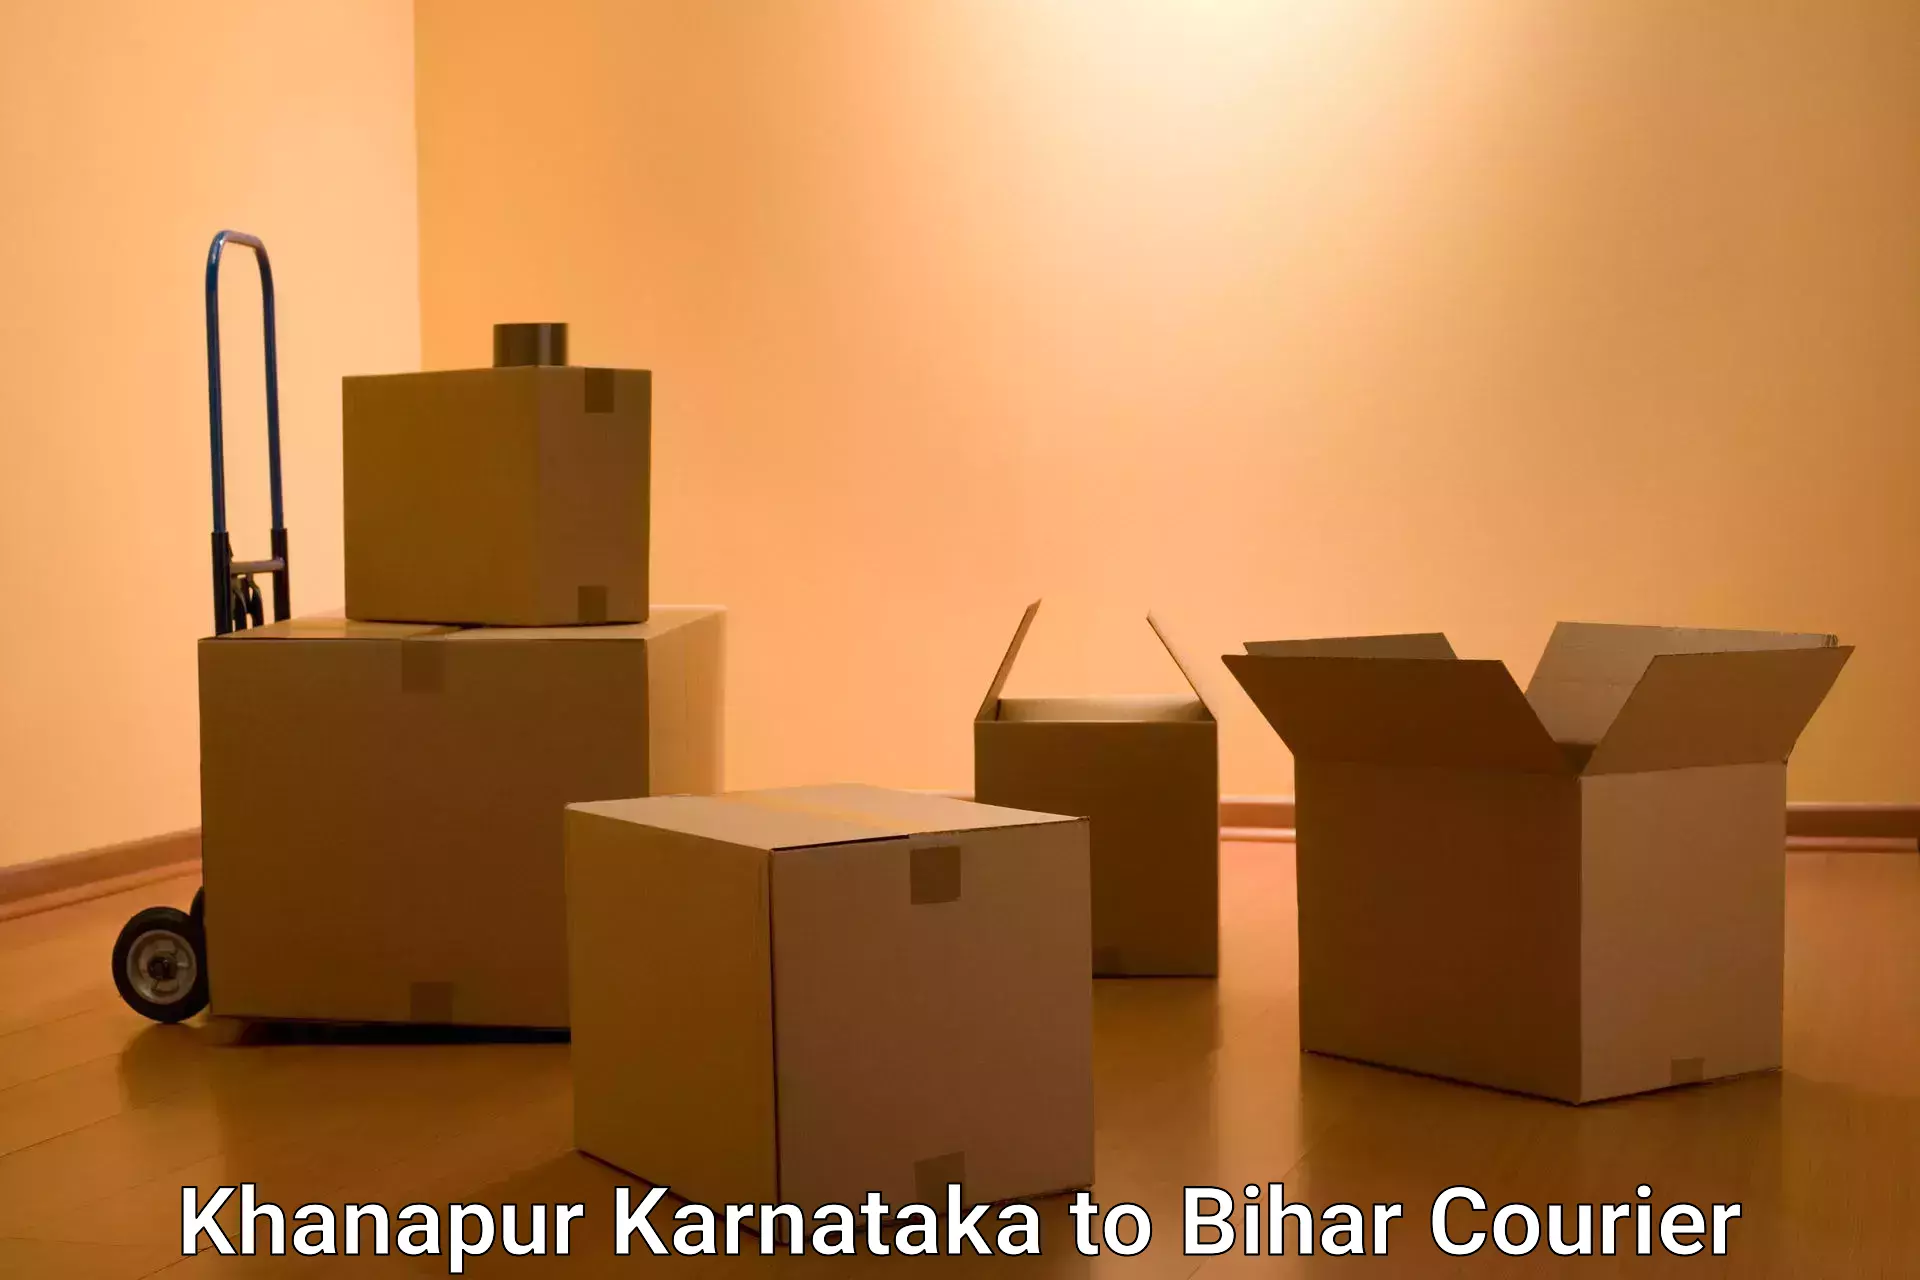 Multi-city courier Khanapur Karnataka to Narkatiaganj